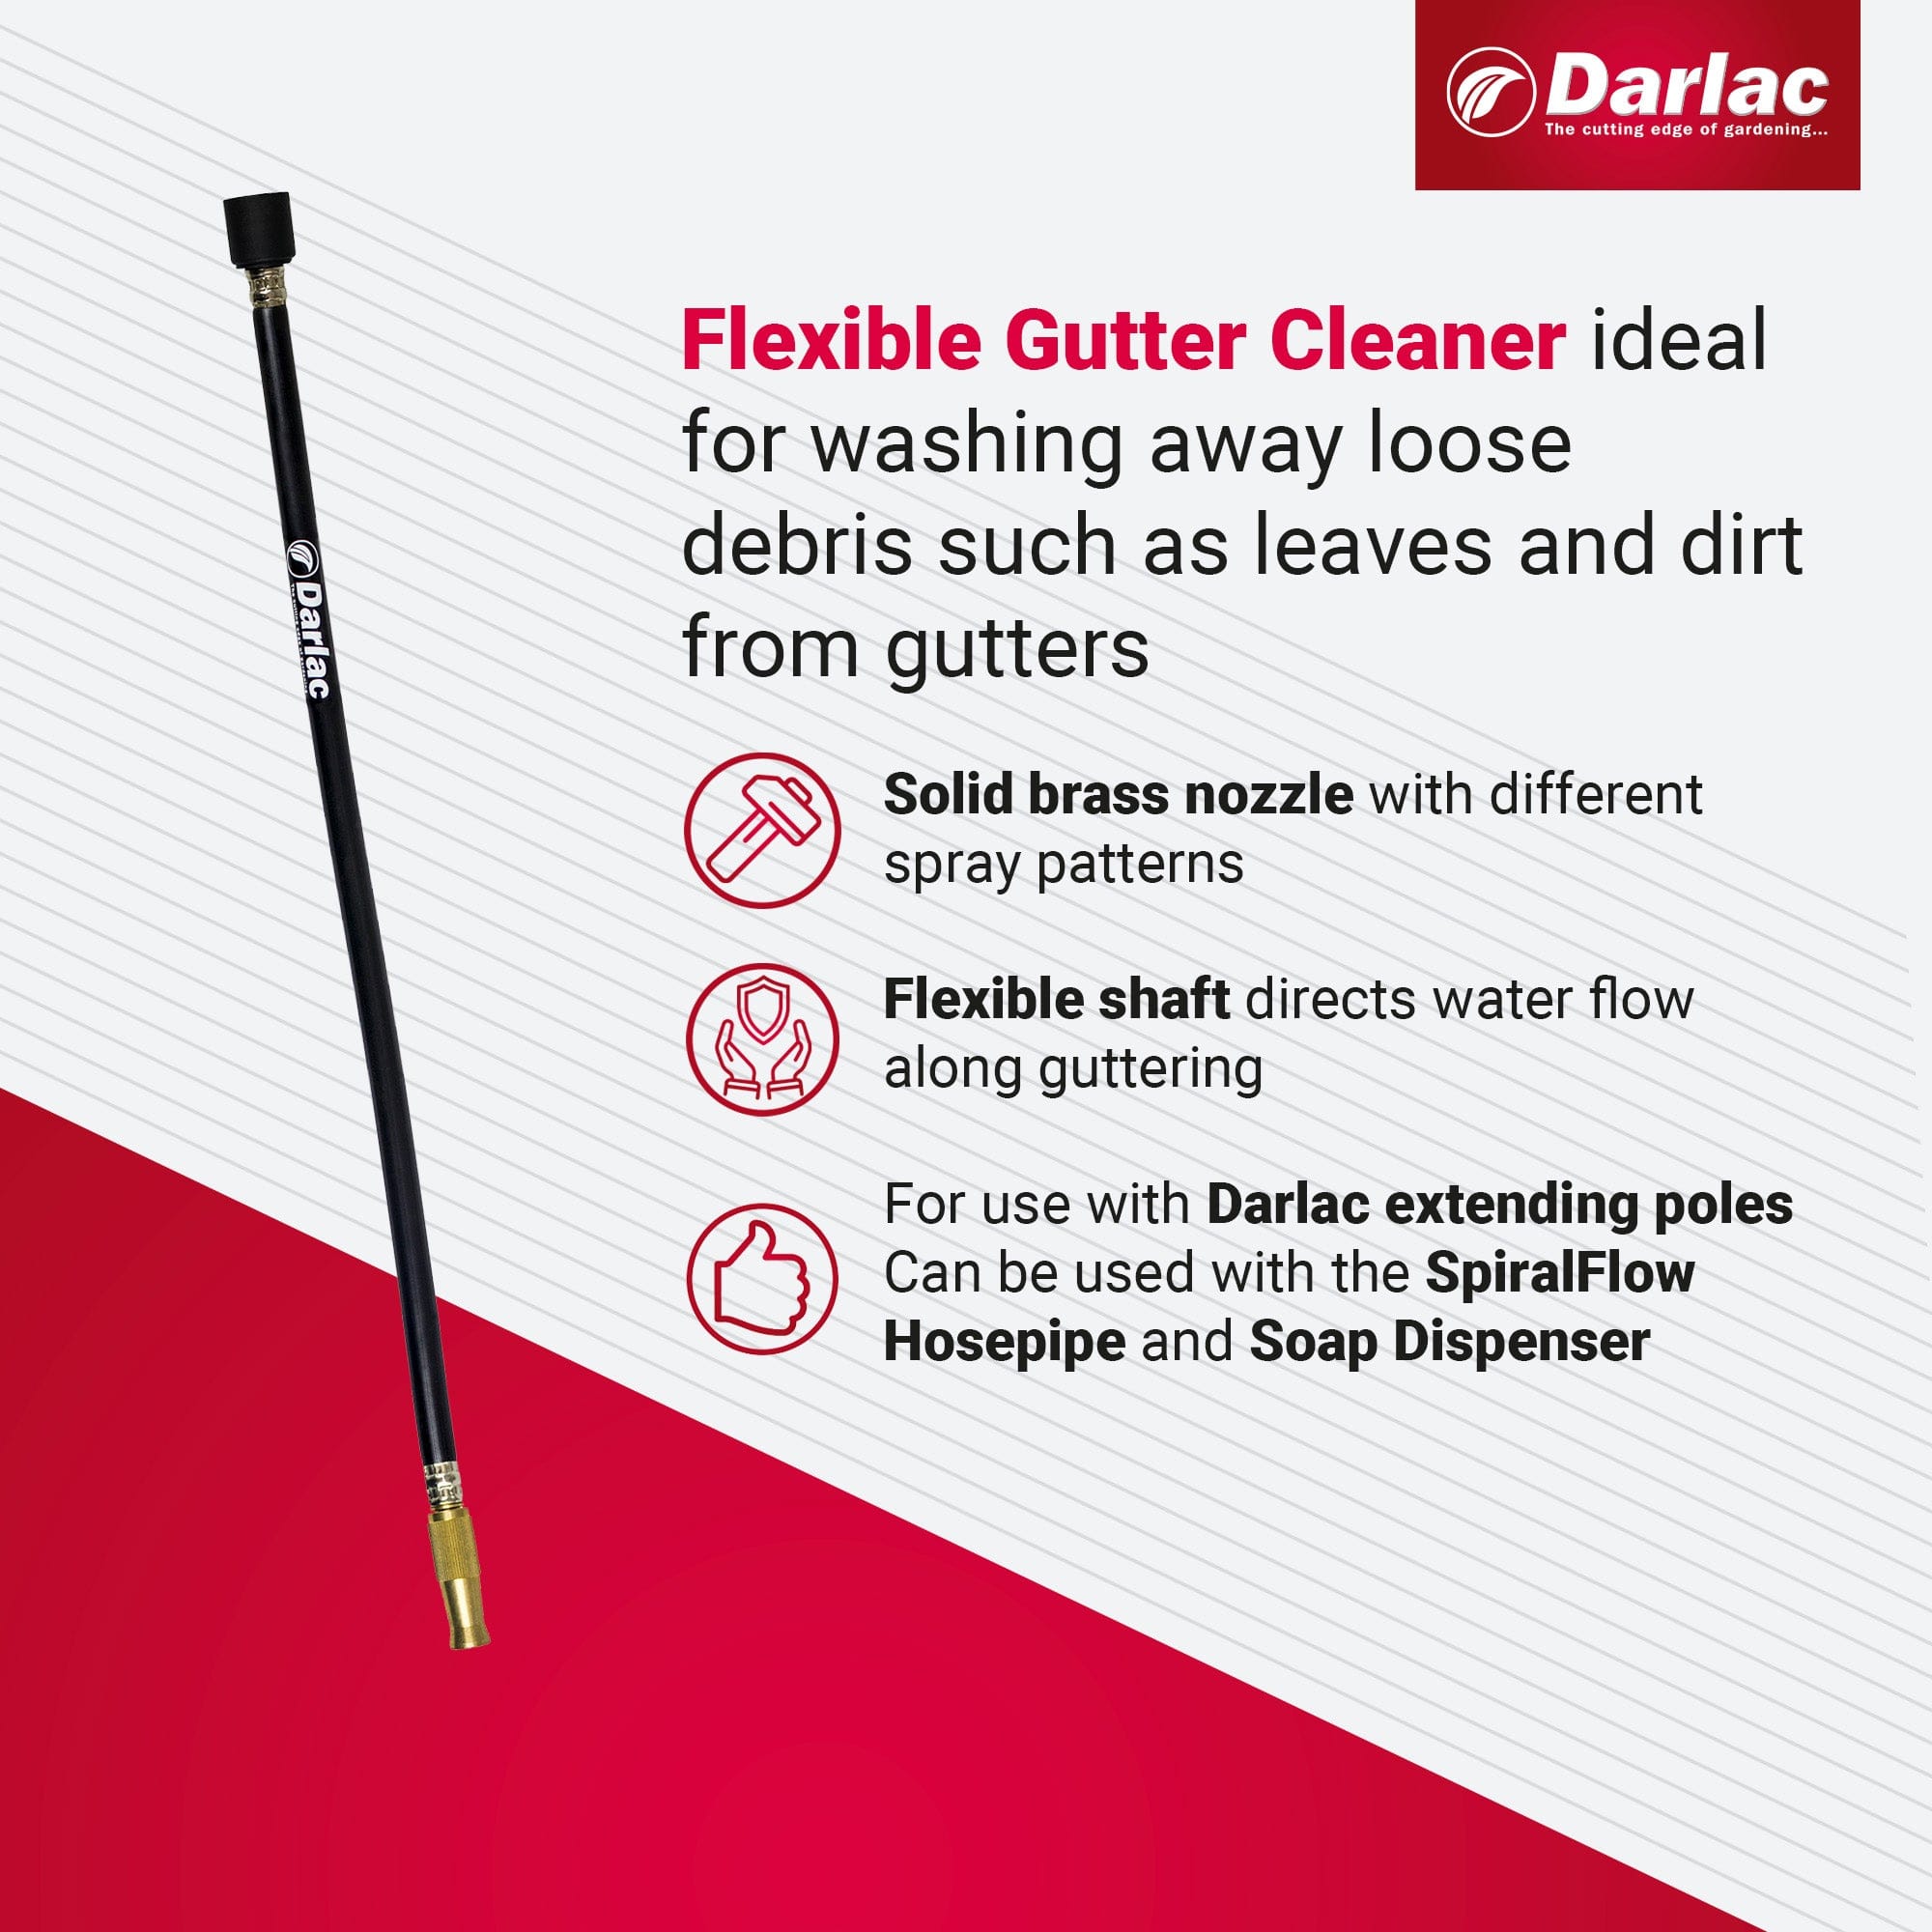 dt-brown HARDWARE Darlac Swop Top Flexible Gutter Cleaner